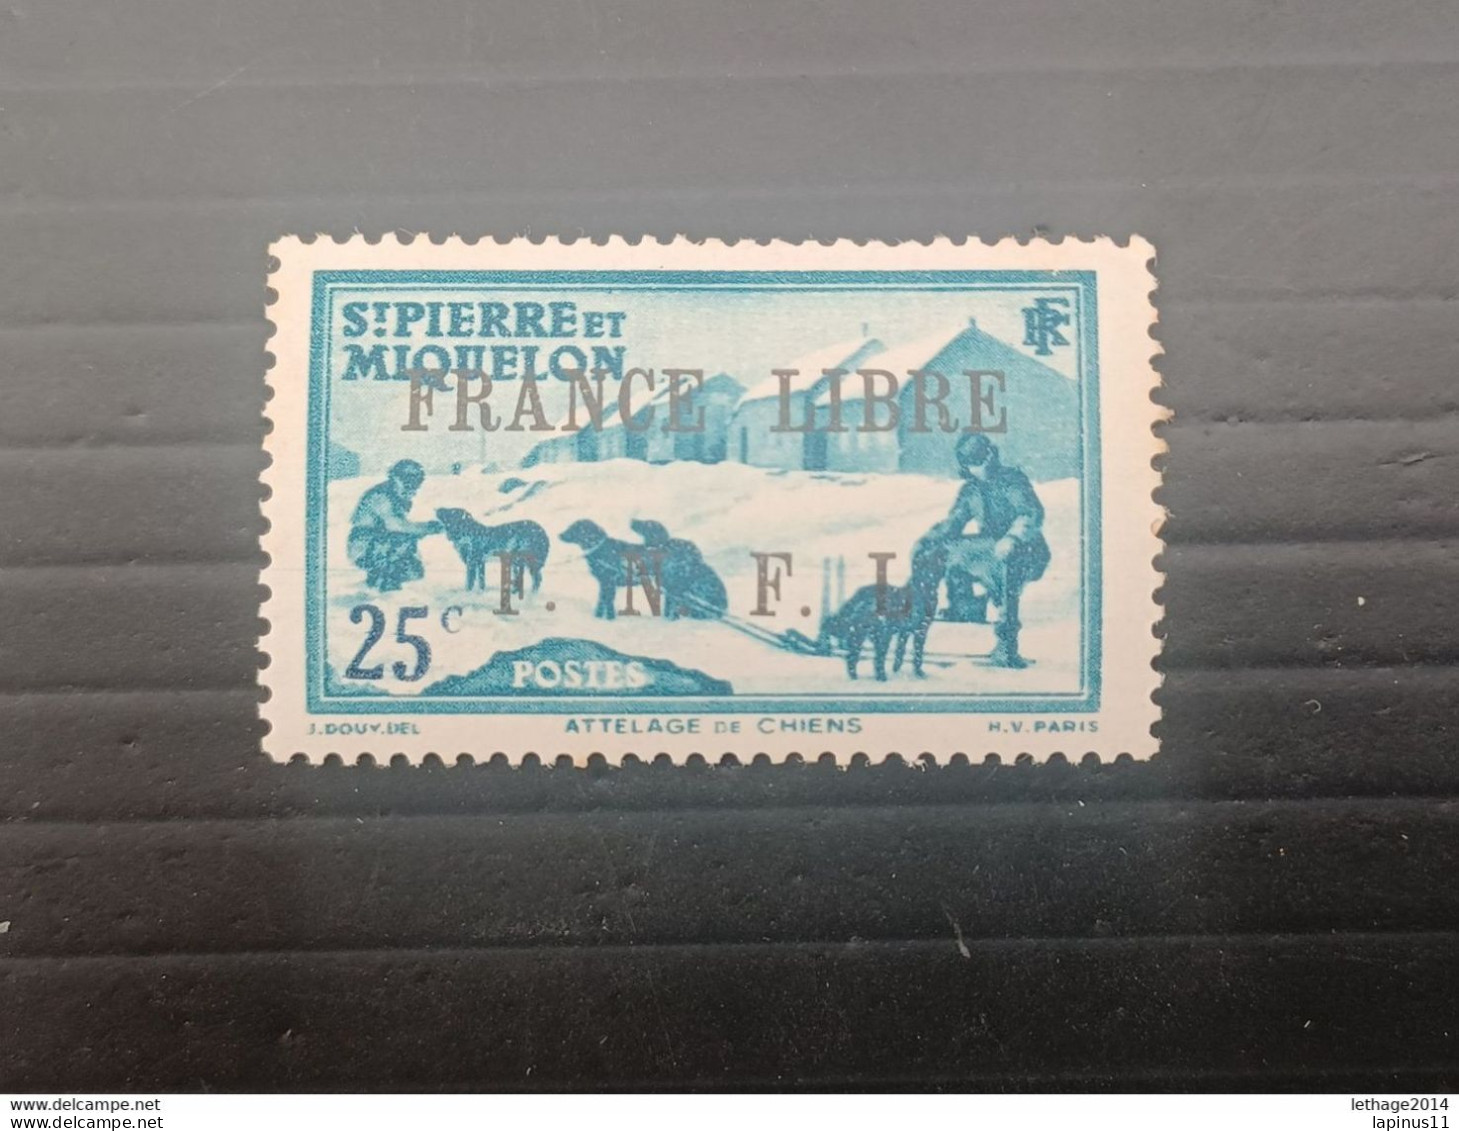 ST PIERRE ET MIQUELLON 1941 STAMPS OF 1922 OVERPRINT FRANCE LIBRE F N F L CAT. YVERT N. 253 MNH - Unused Stamps